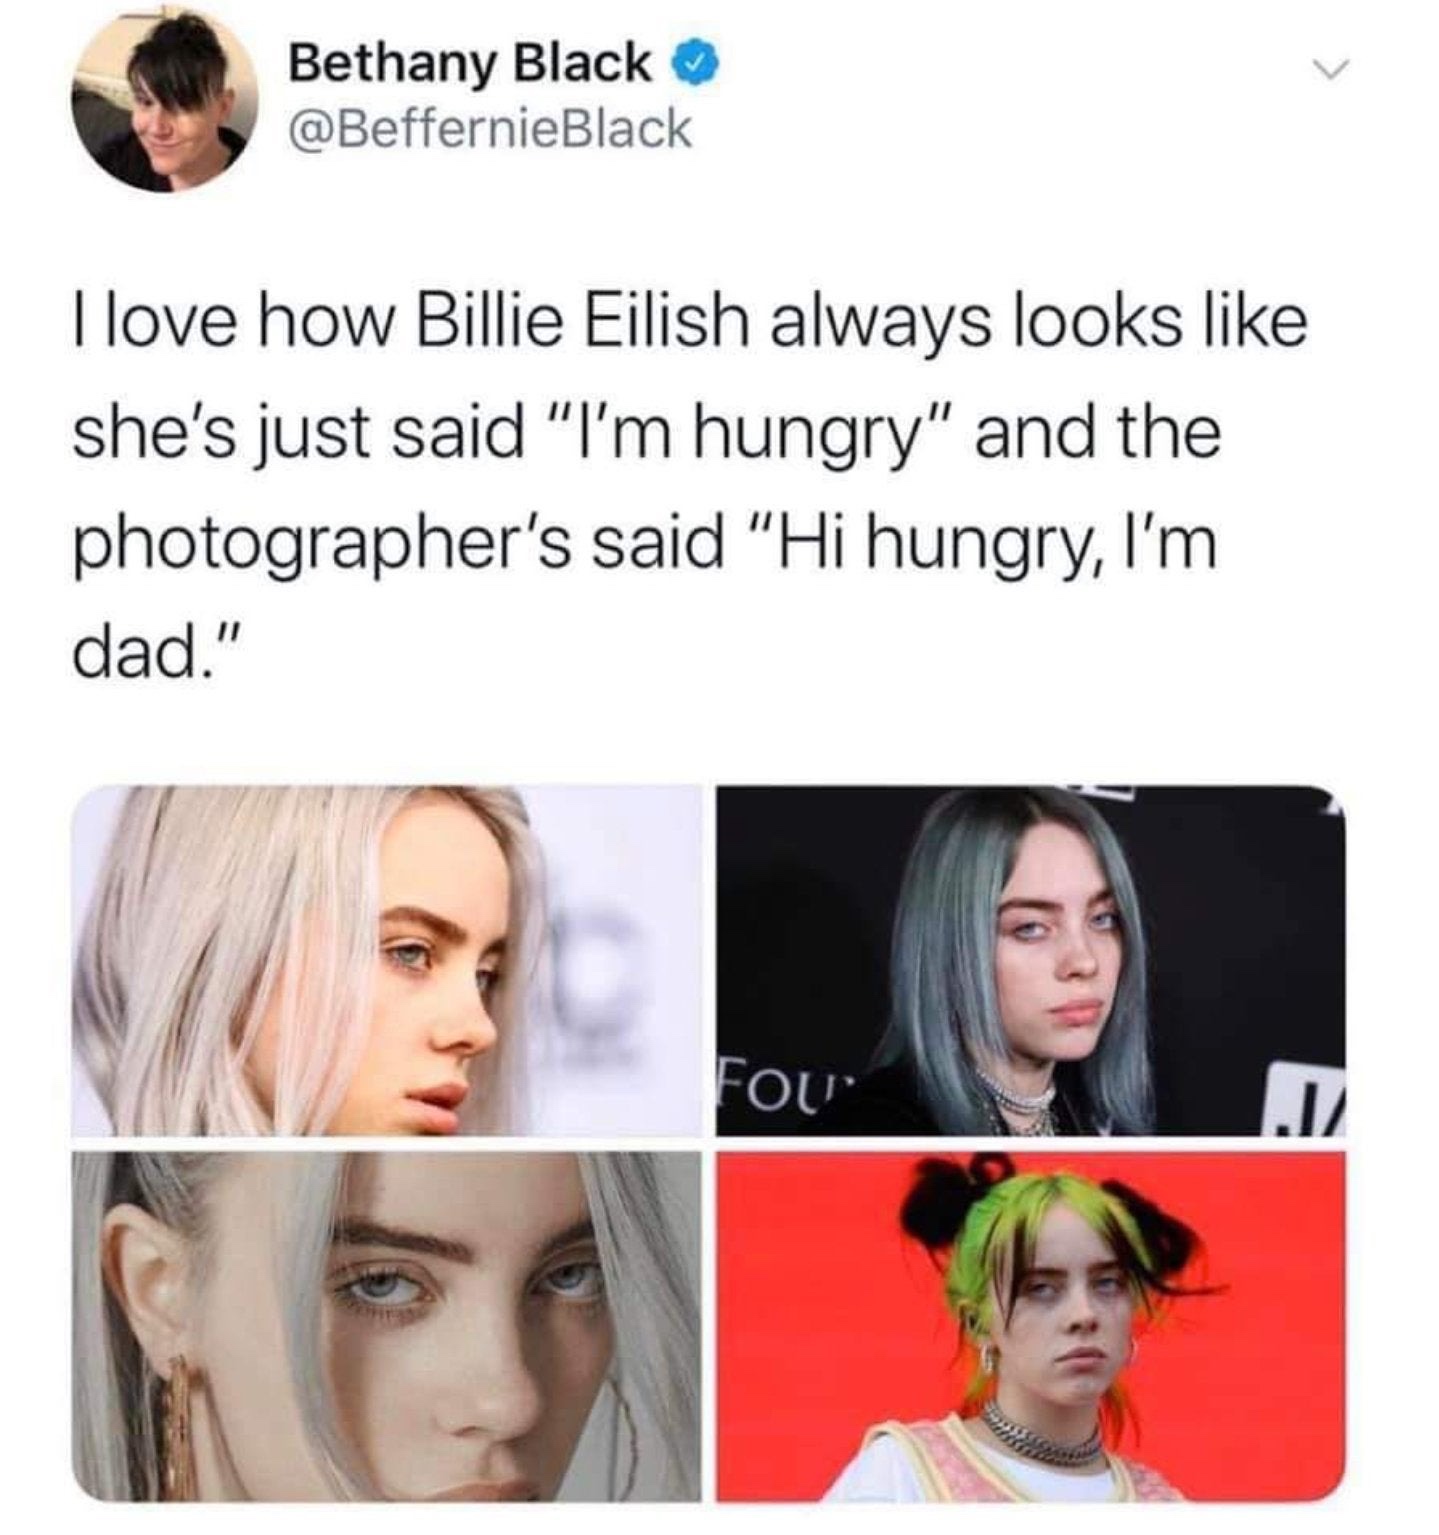 billie eilish meme dad - Bethany Black Llove how Billie Eilish always looks she's just said "I'm hungry" and the photographer's said "Hi hungry, I'm dad." Ou